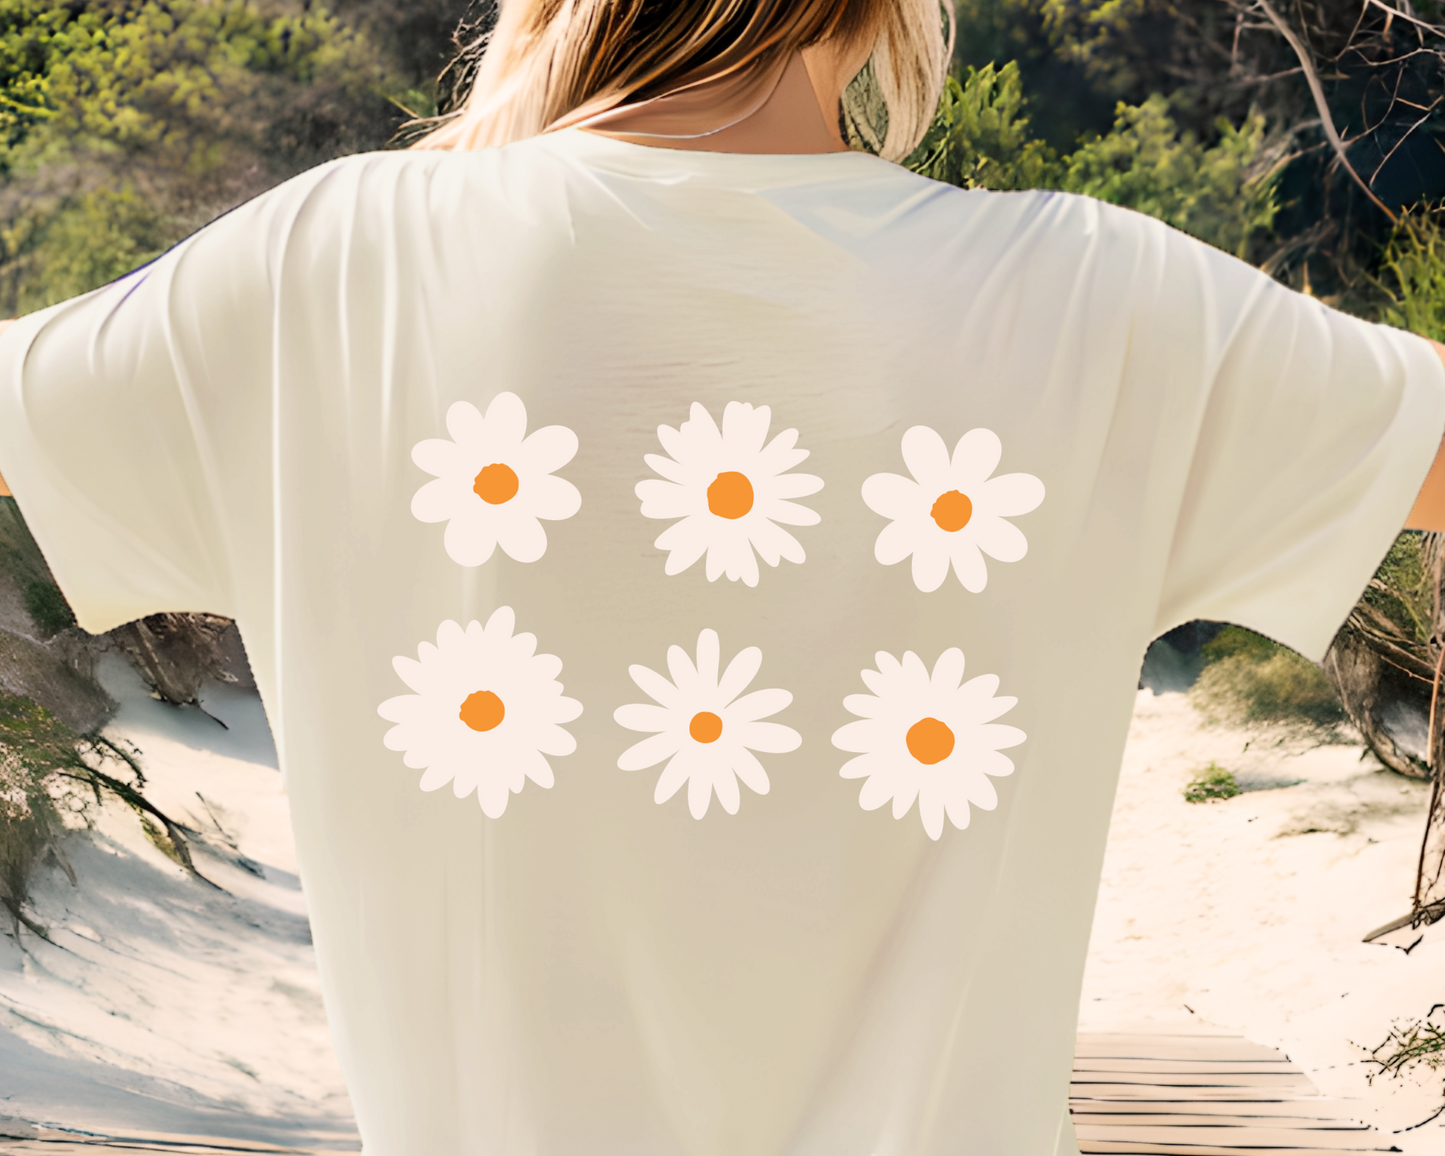 FREE Daisy Flower SVG | Simple Daisy SVG